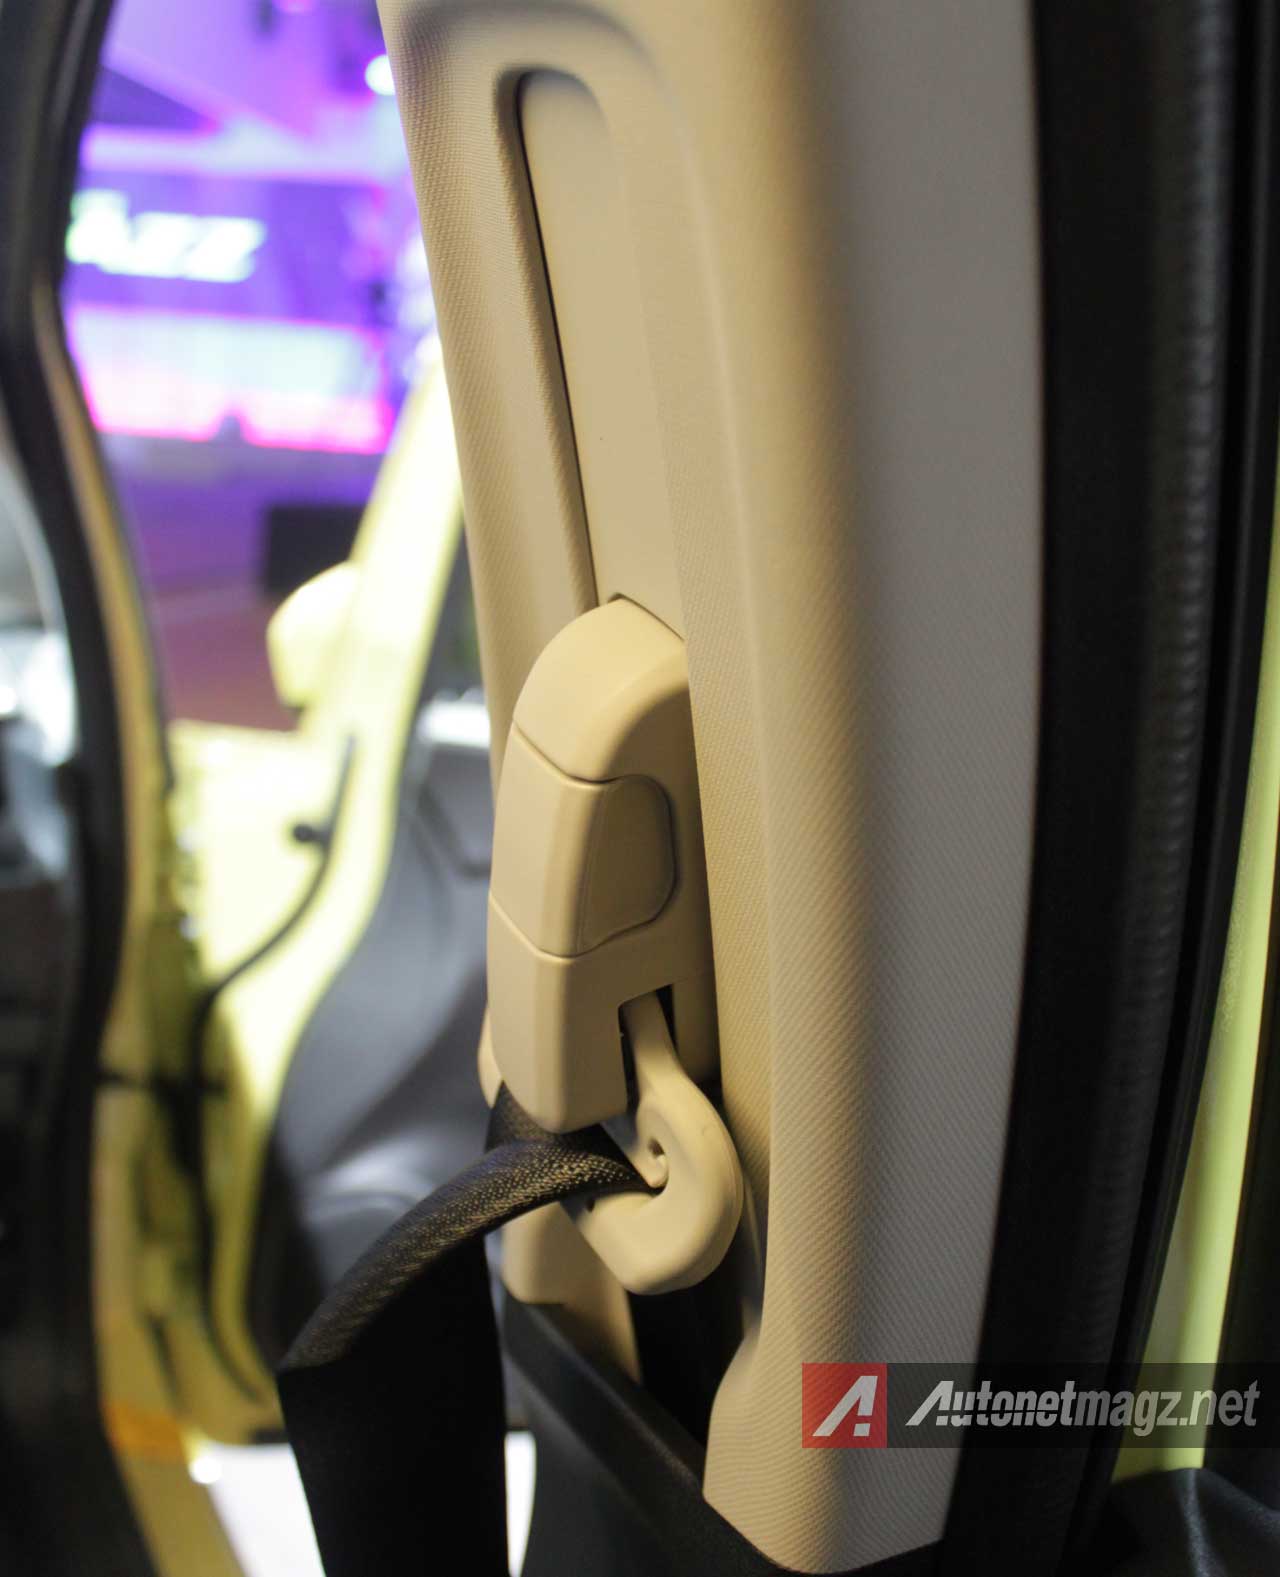 Honda, Seatbelt-Honda-Jazz-RS: First Impression Review Honda Jazz RS 2014 by AutonetMagz